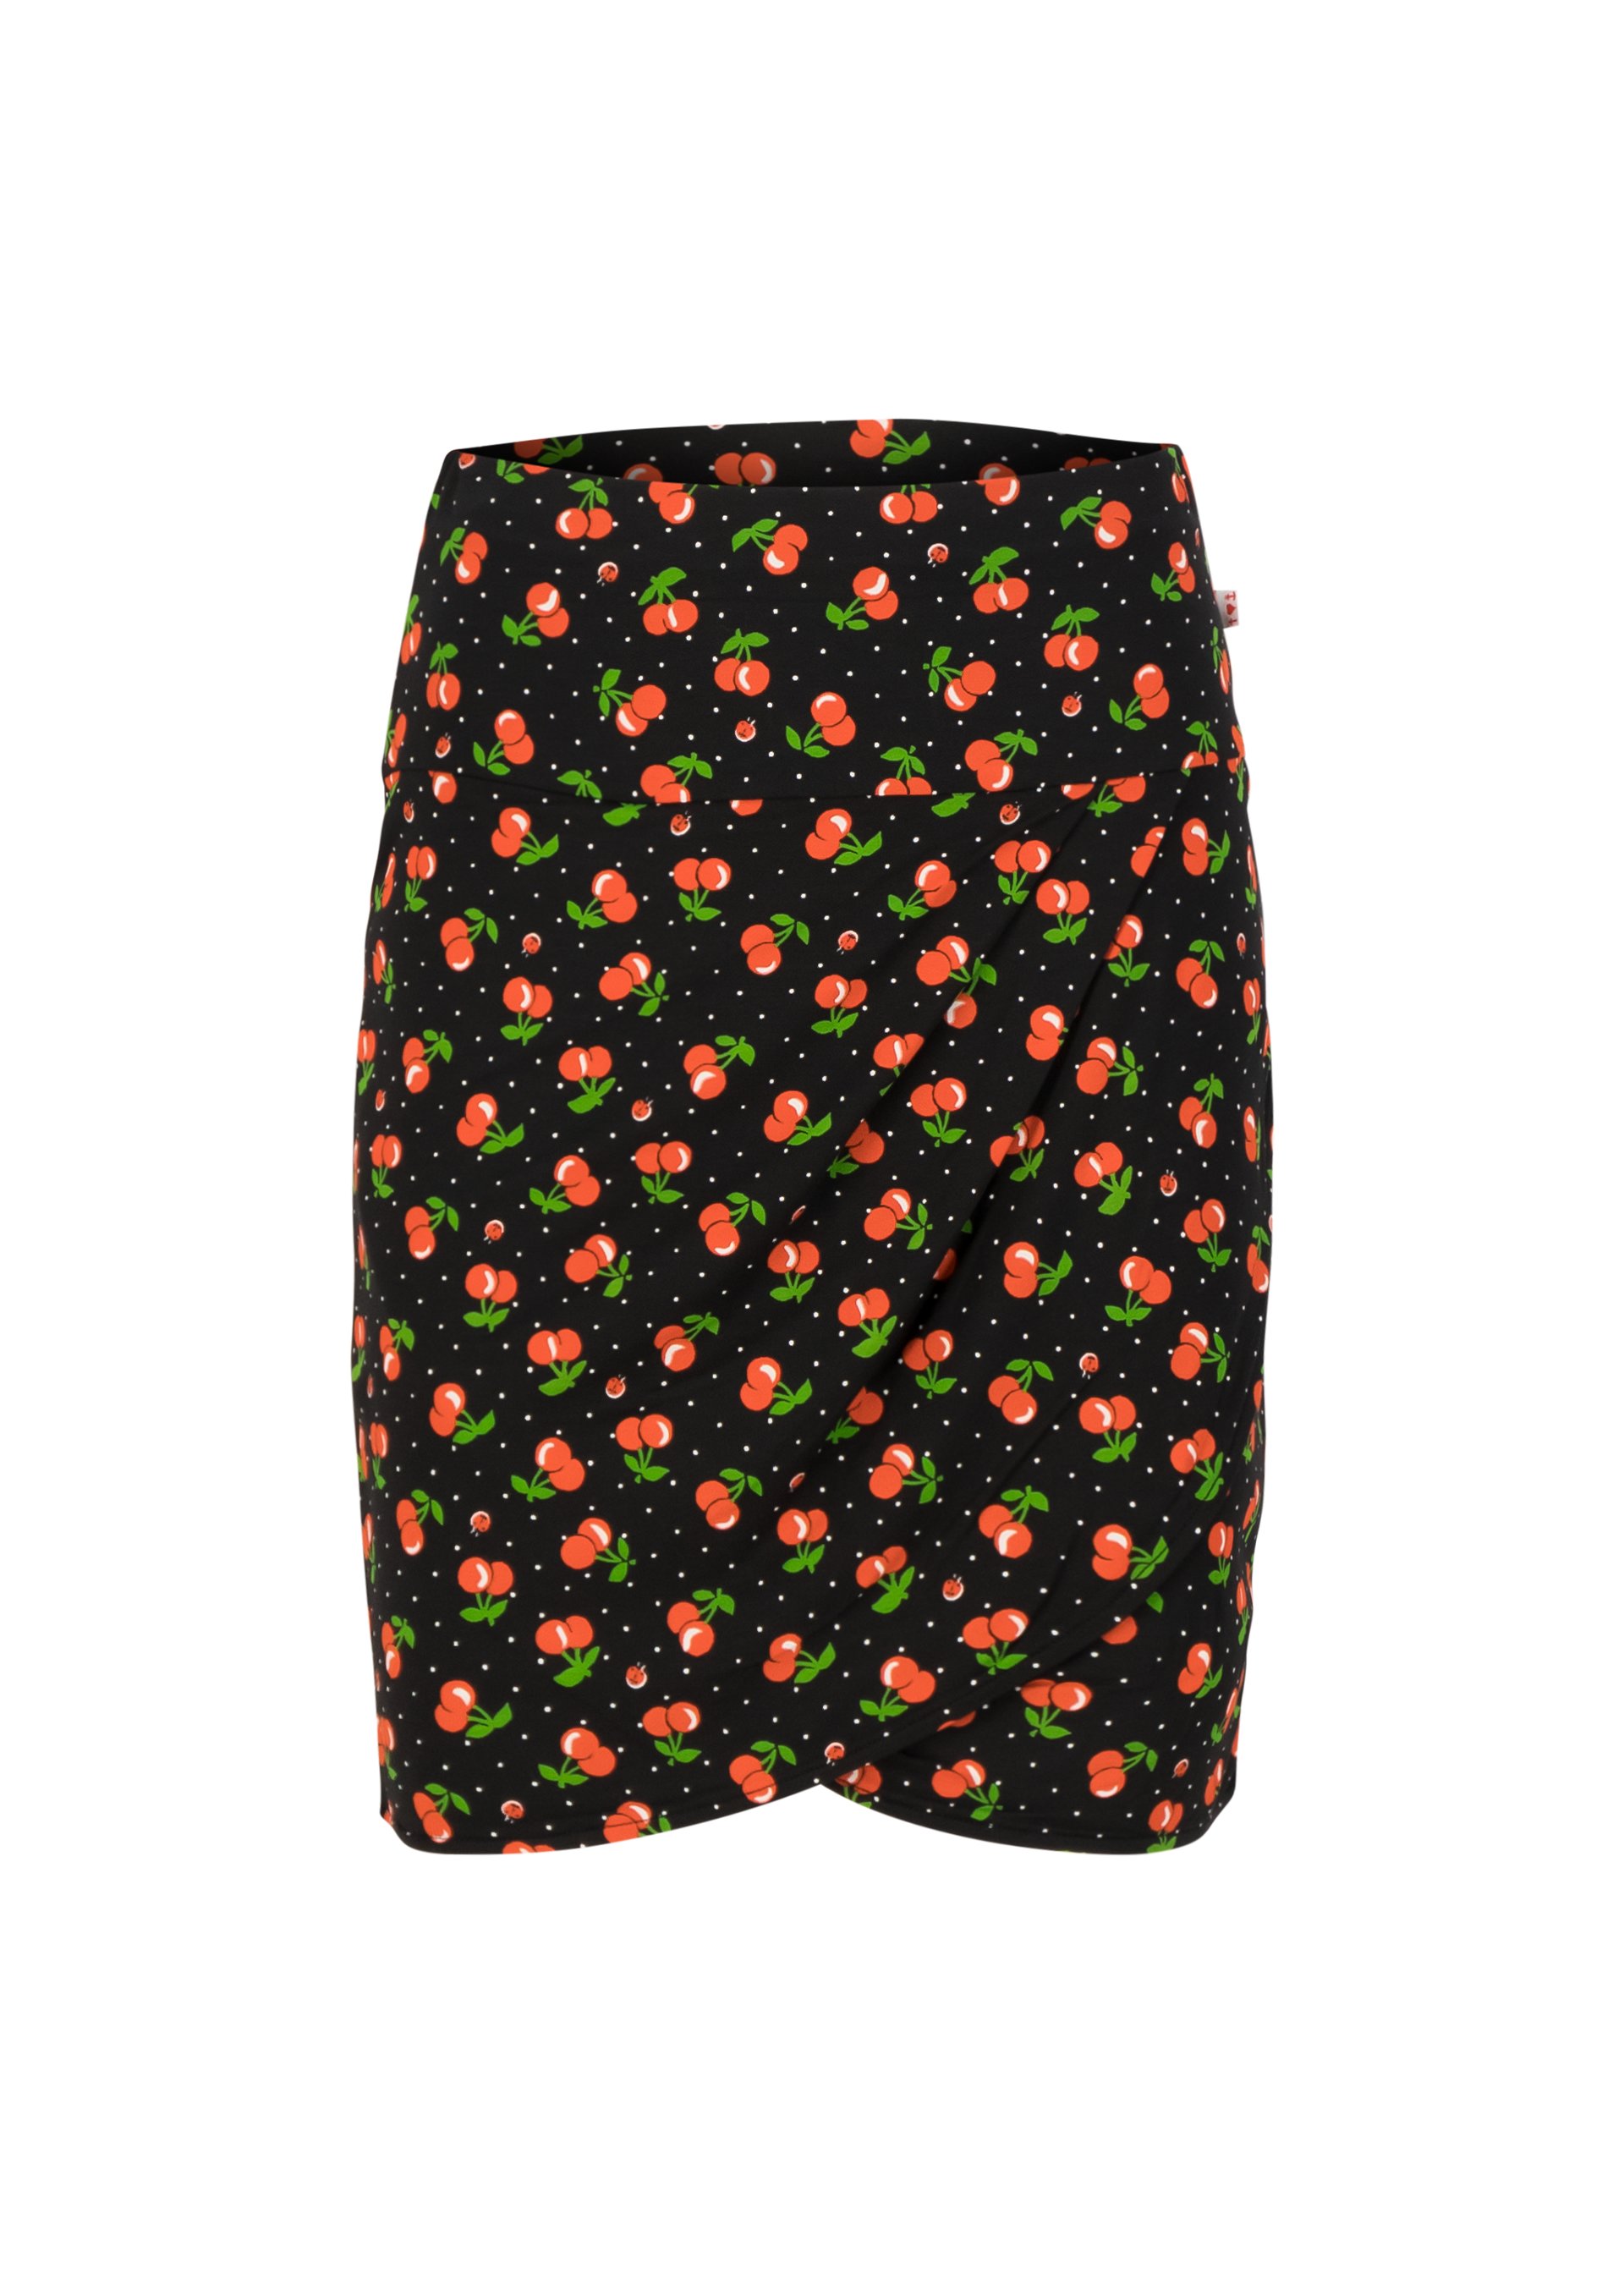 Mini Skirt dreamy swinging, cherry ladybug, Skirts, Black